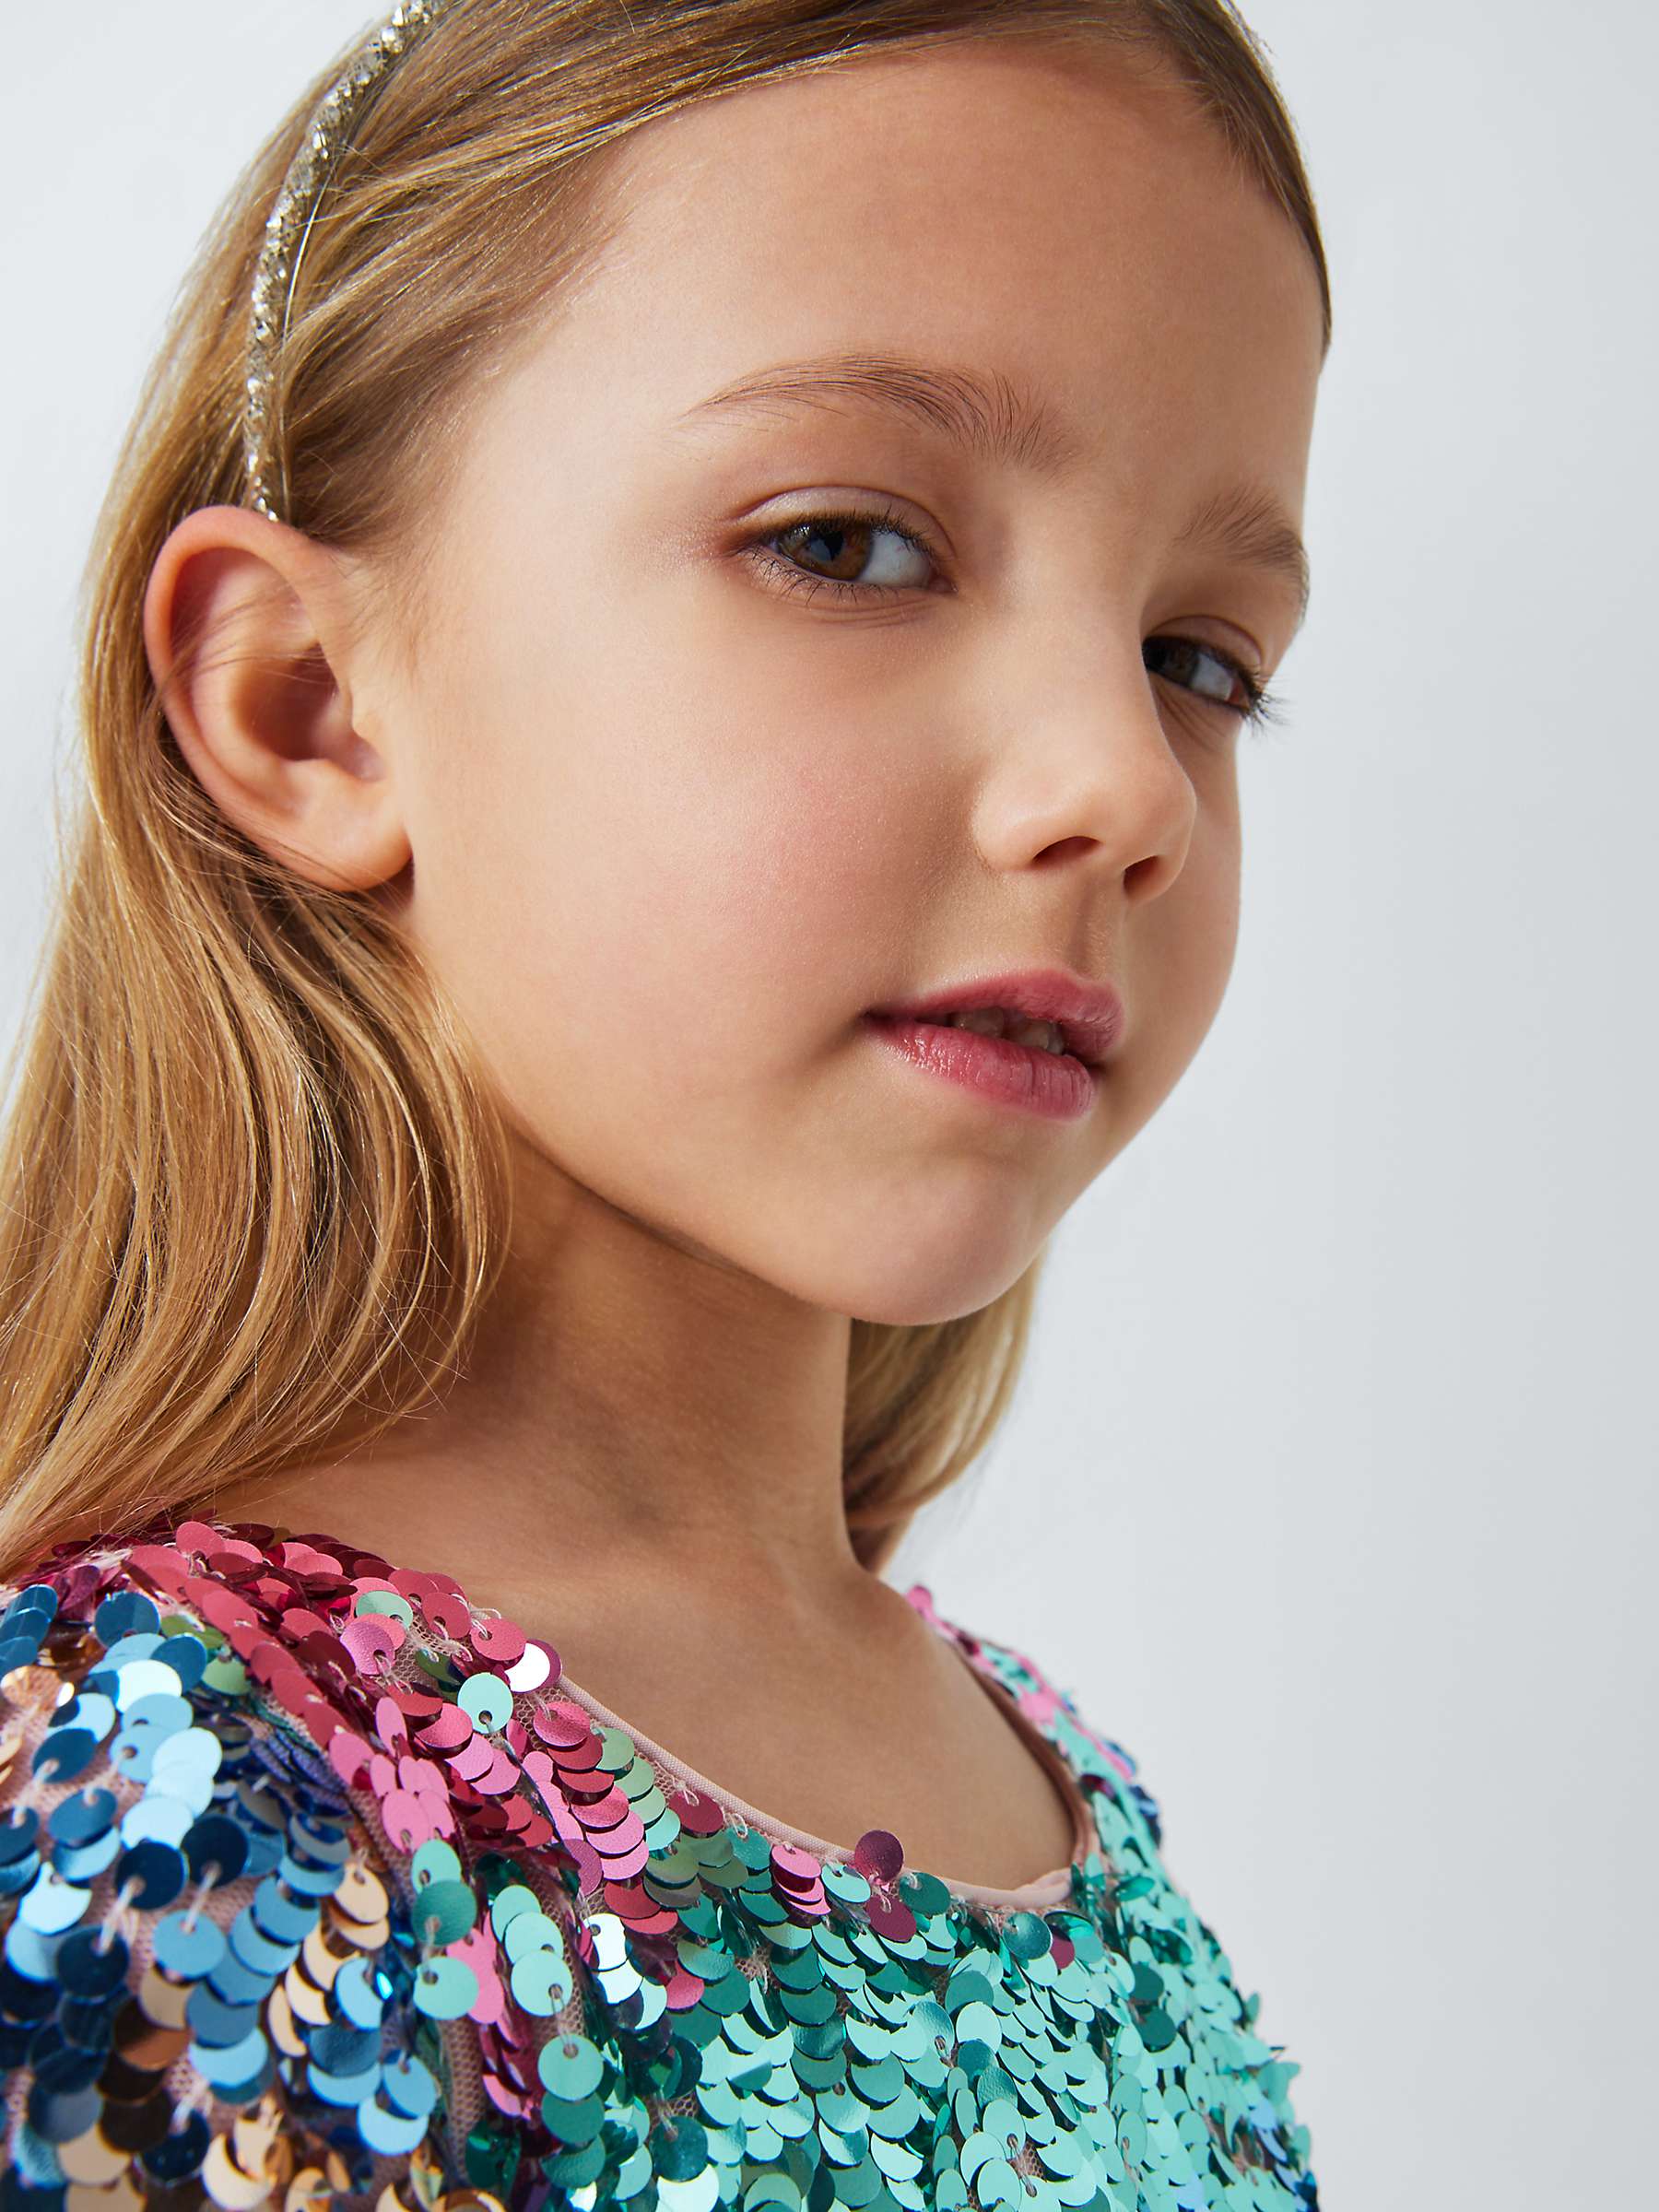 Buy John Lewis Kids' Sequin Ombre Dress, Multi Online at johnlewis.com